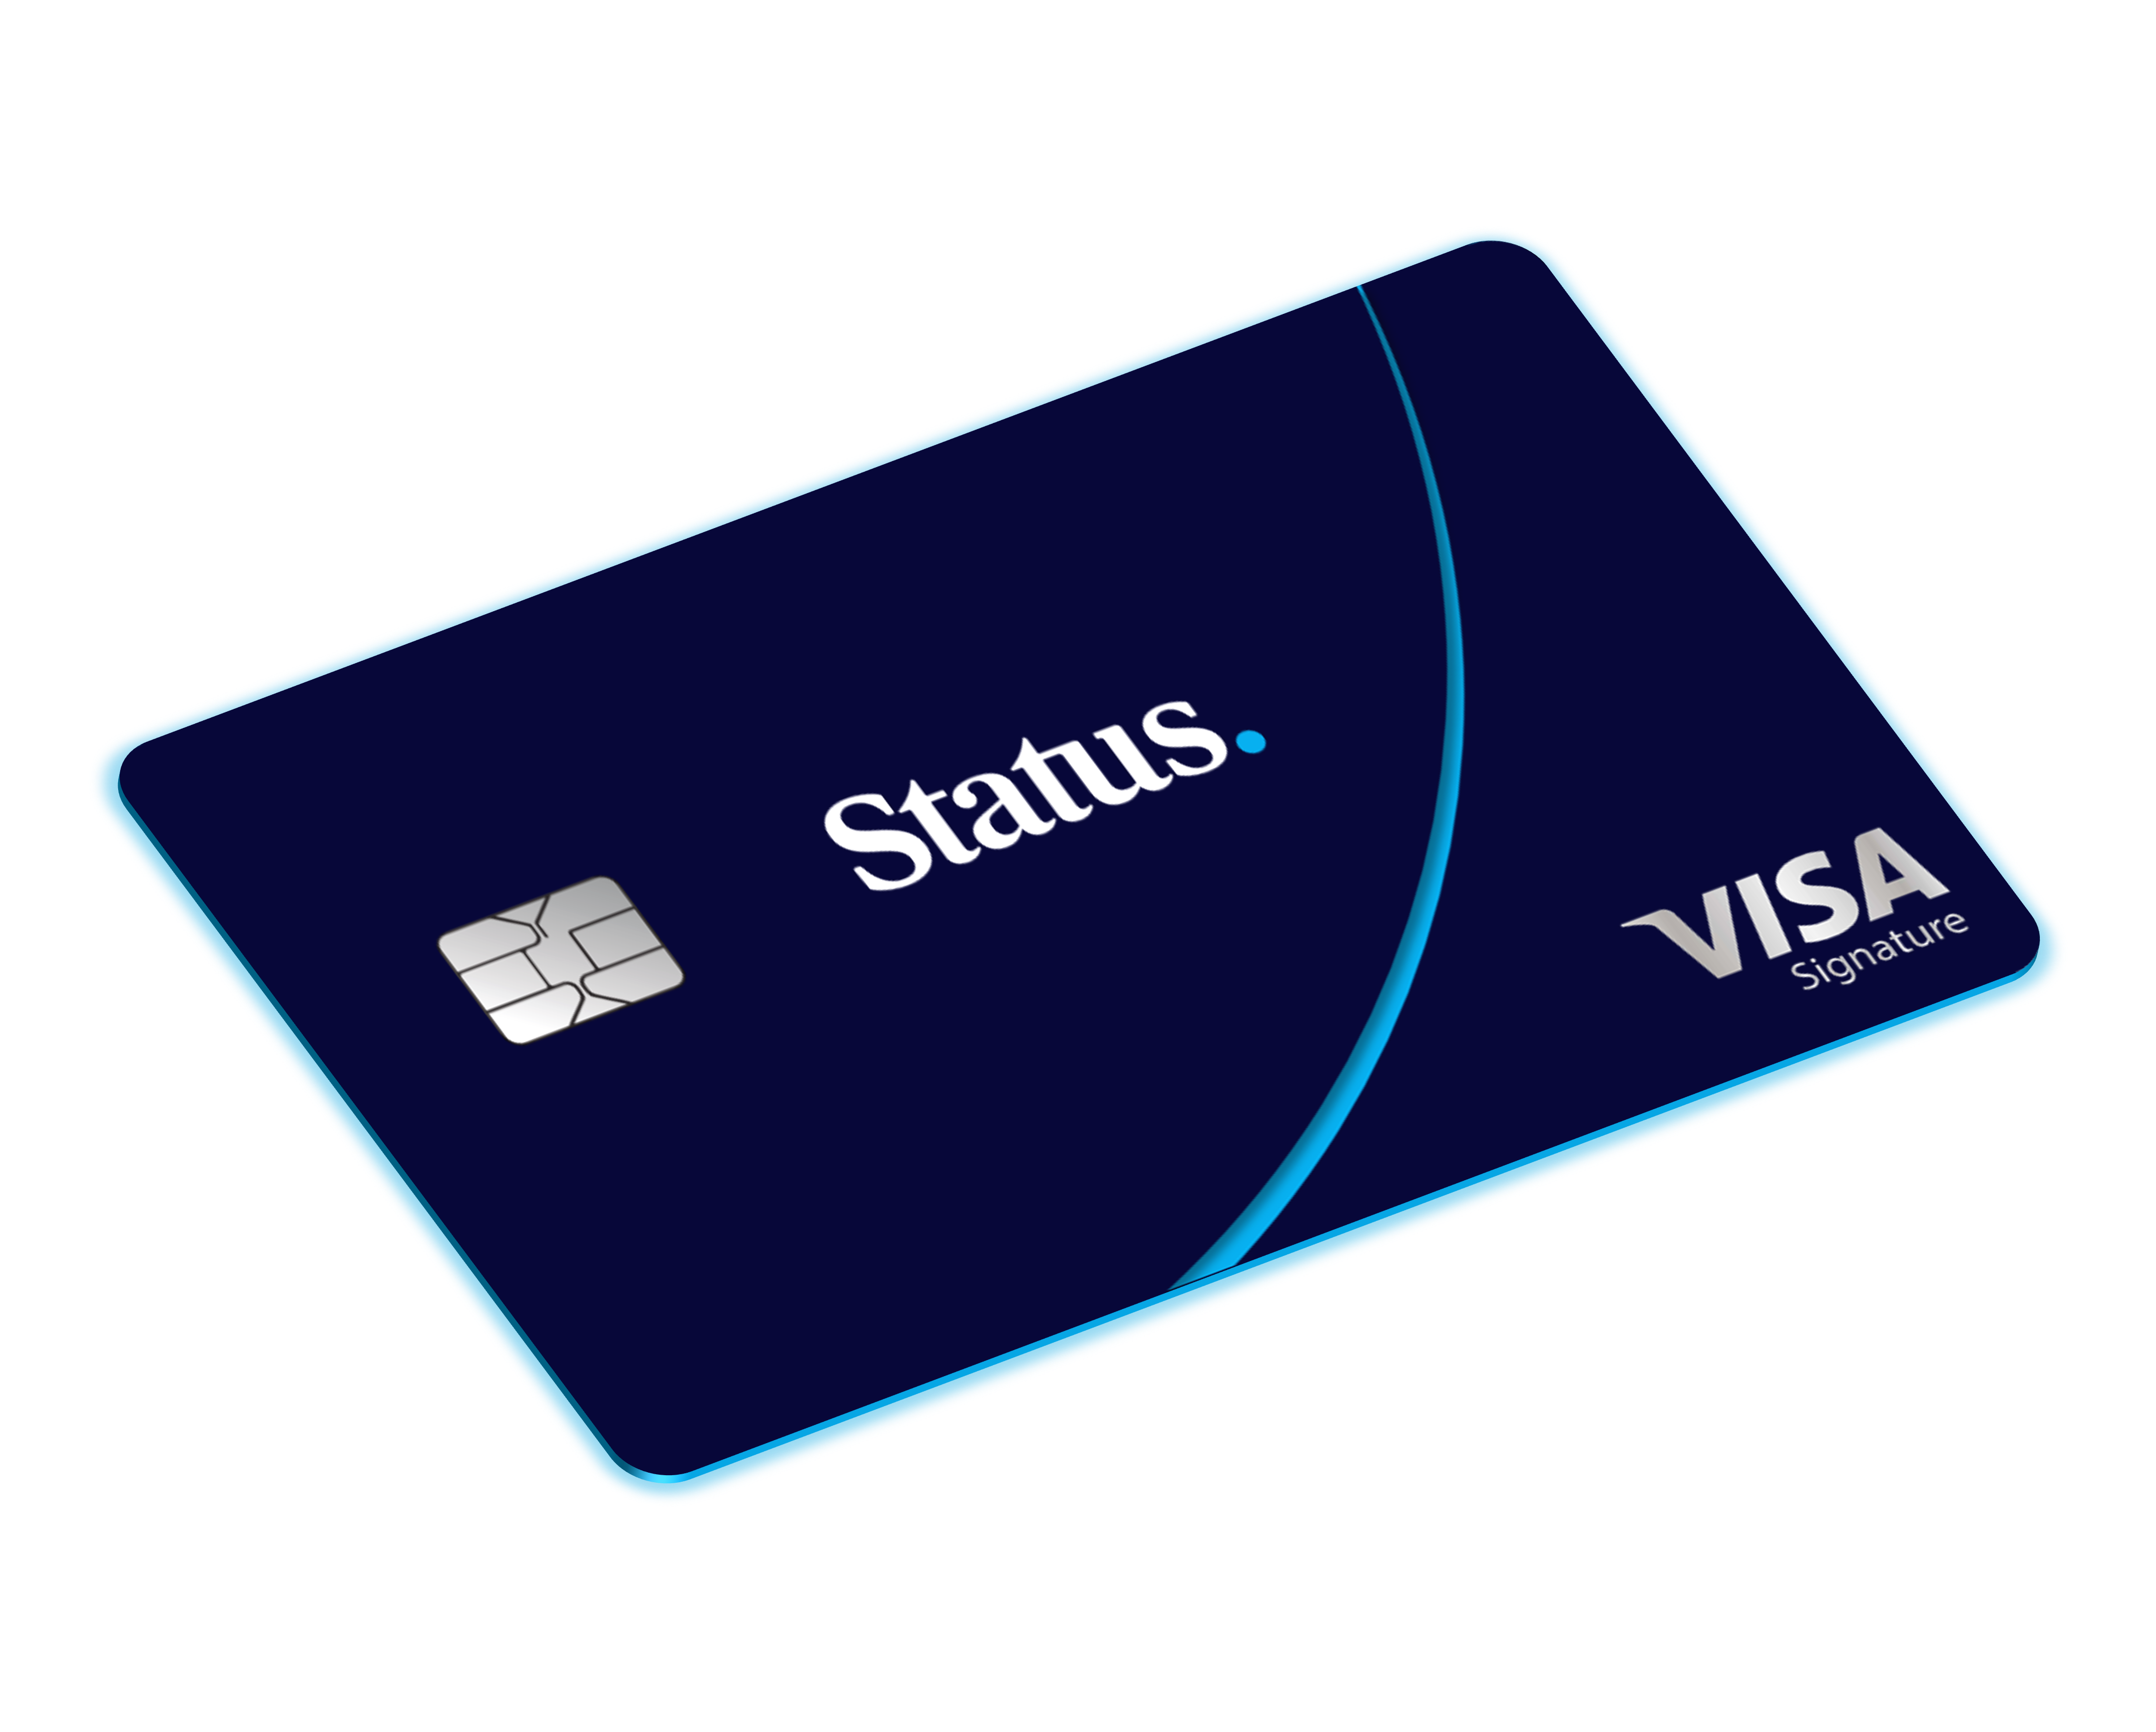 The Status Credit Card